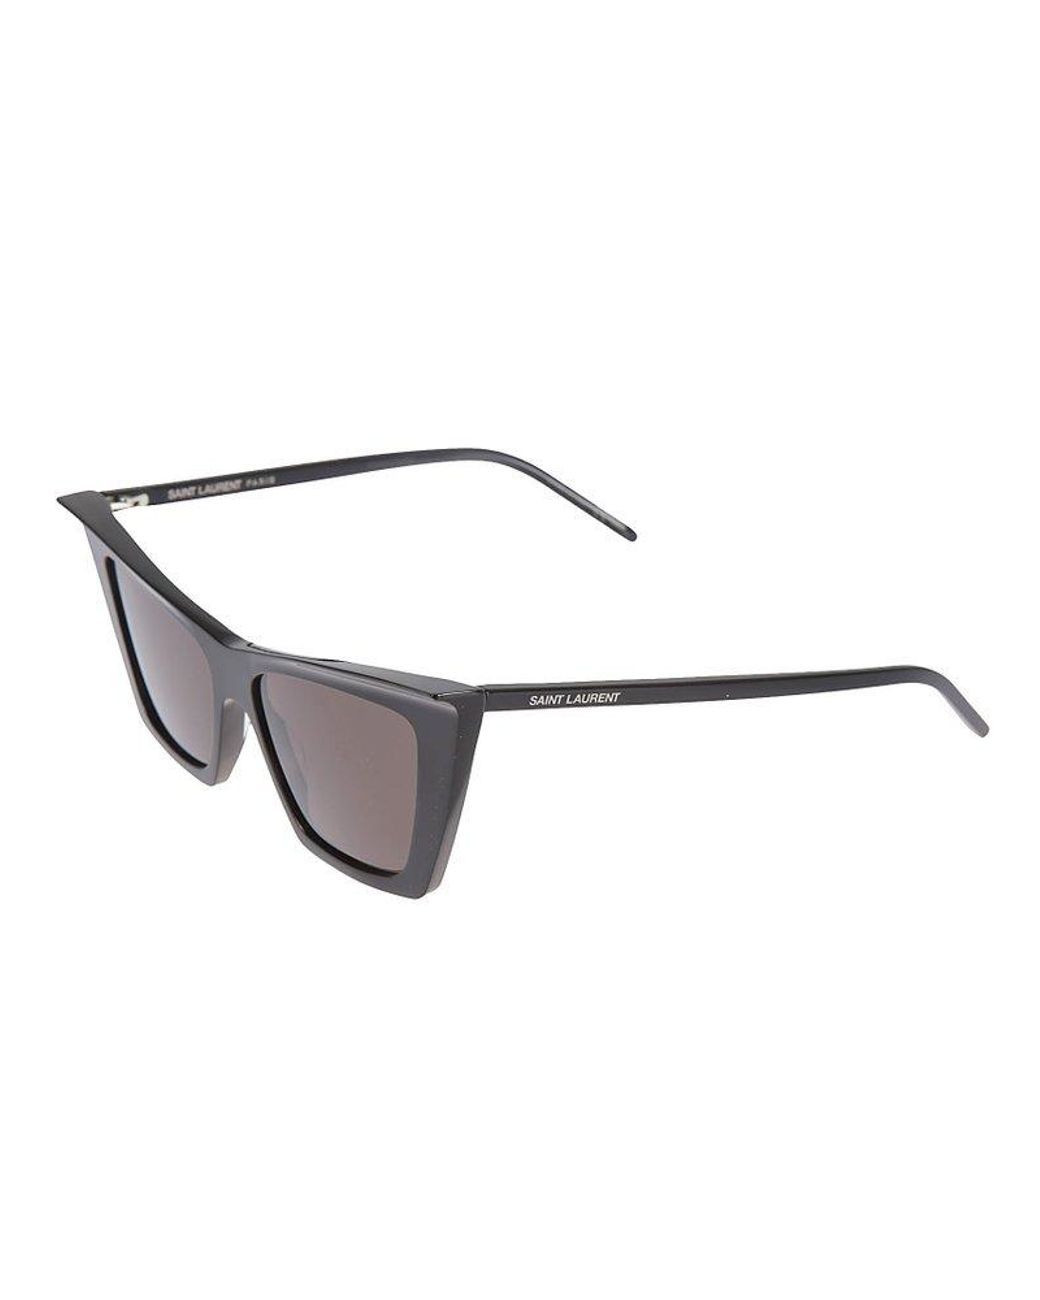 SL 372 Cat Eye Sunglasses in Black - Saint Laurent